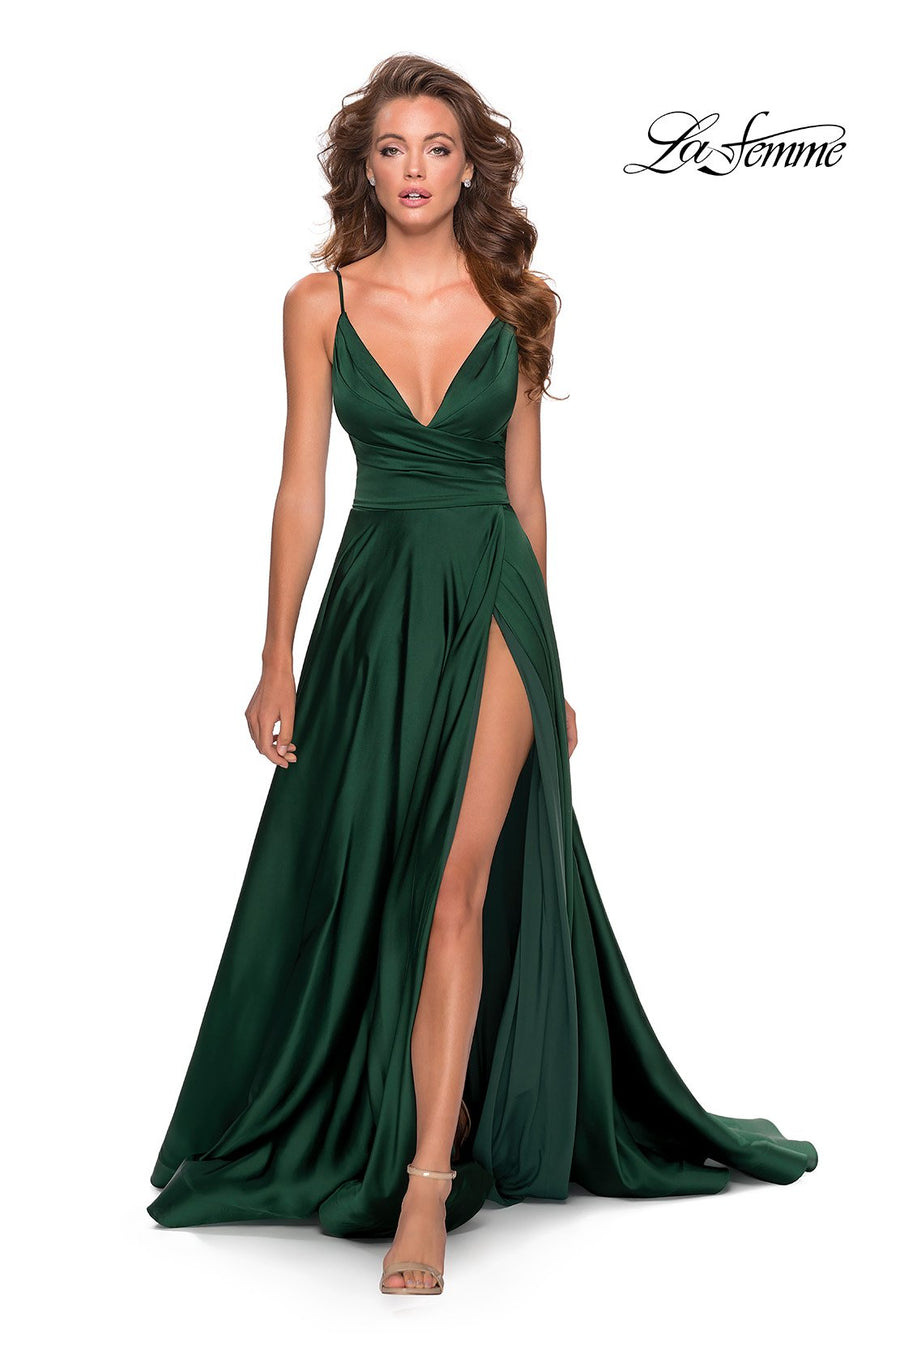 La Femme 28607 prom dress images.  La Femme 28607 is available in these colors: Emerald, Mauve, Navy, Pale Yellow, Royal Blue, Royal Purple.